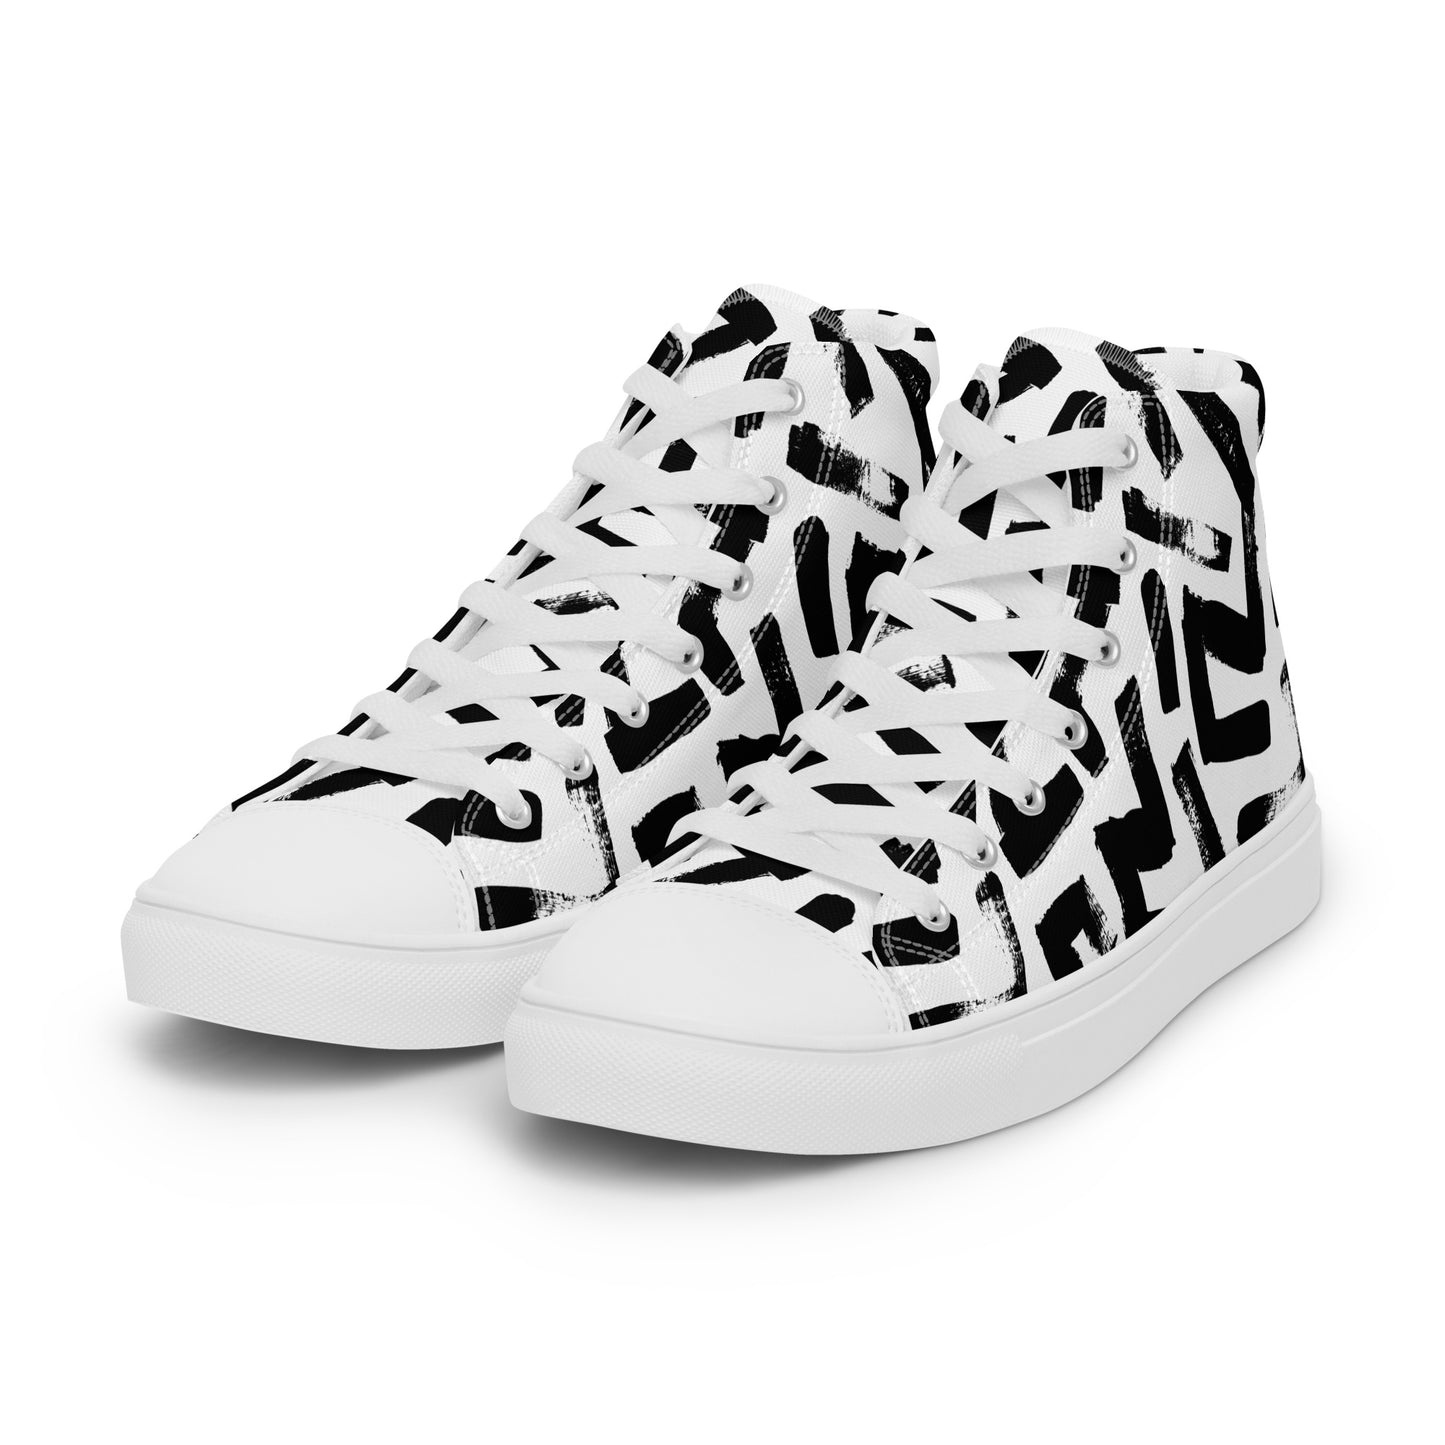 Maze high top canvas shoes